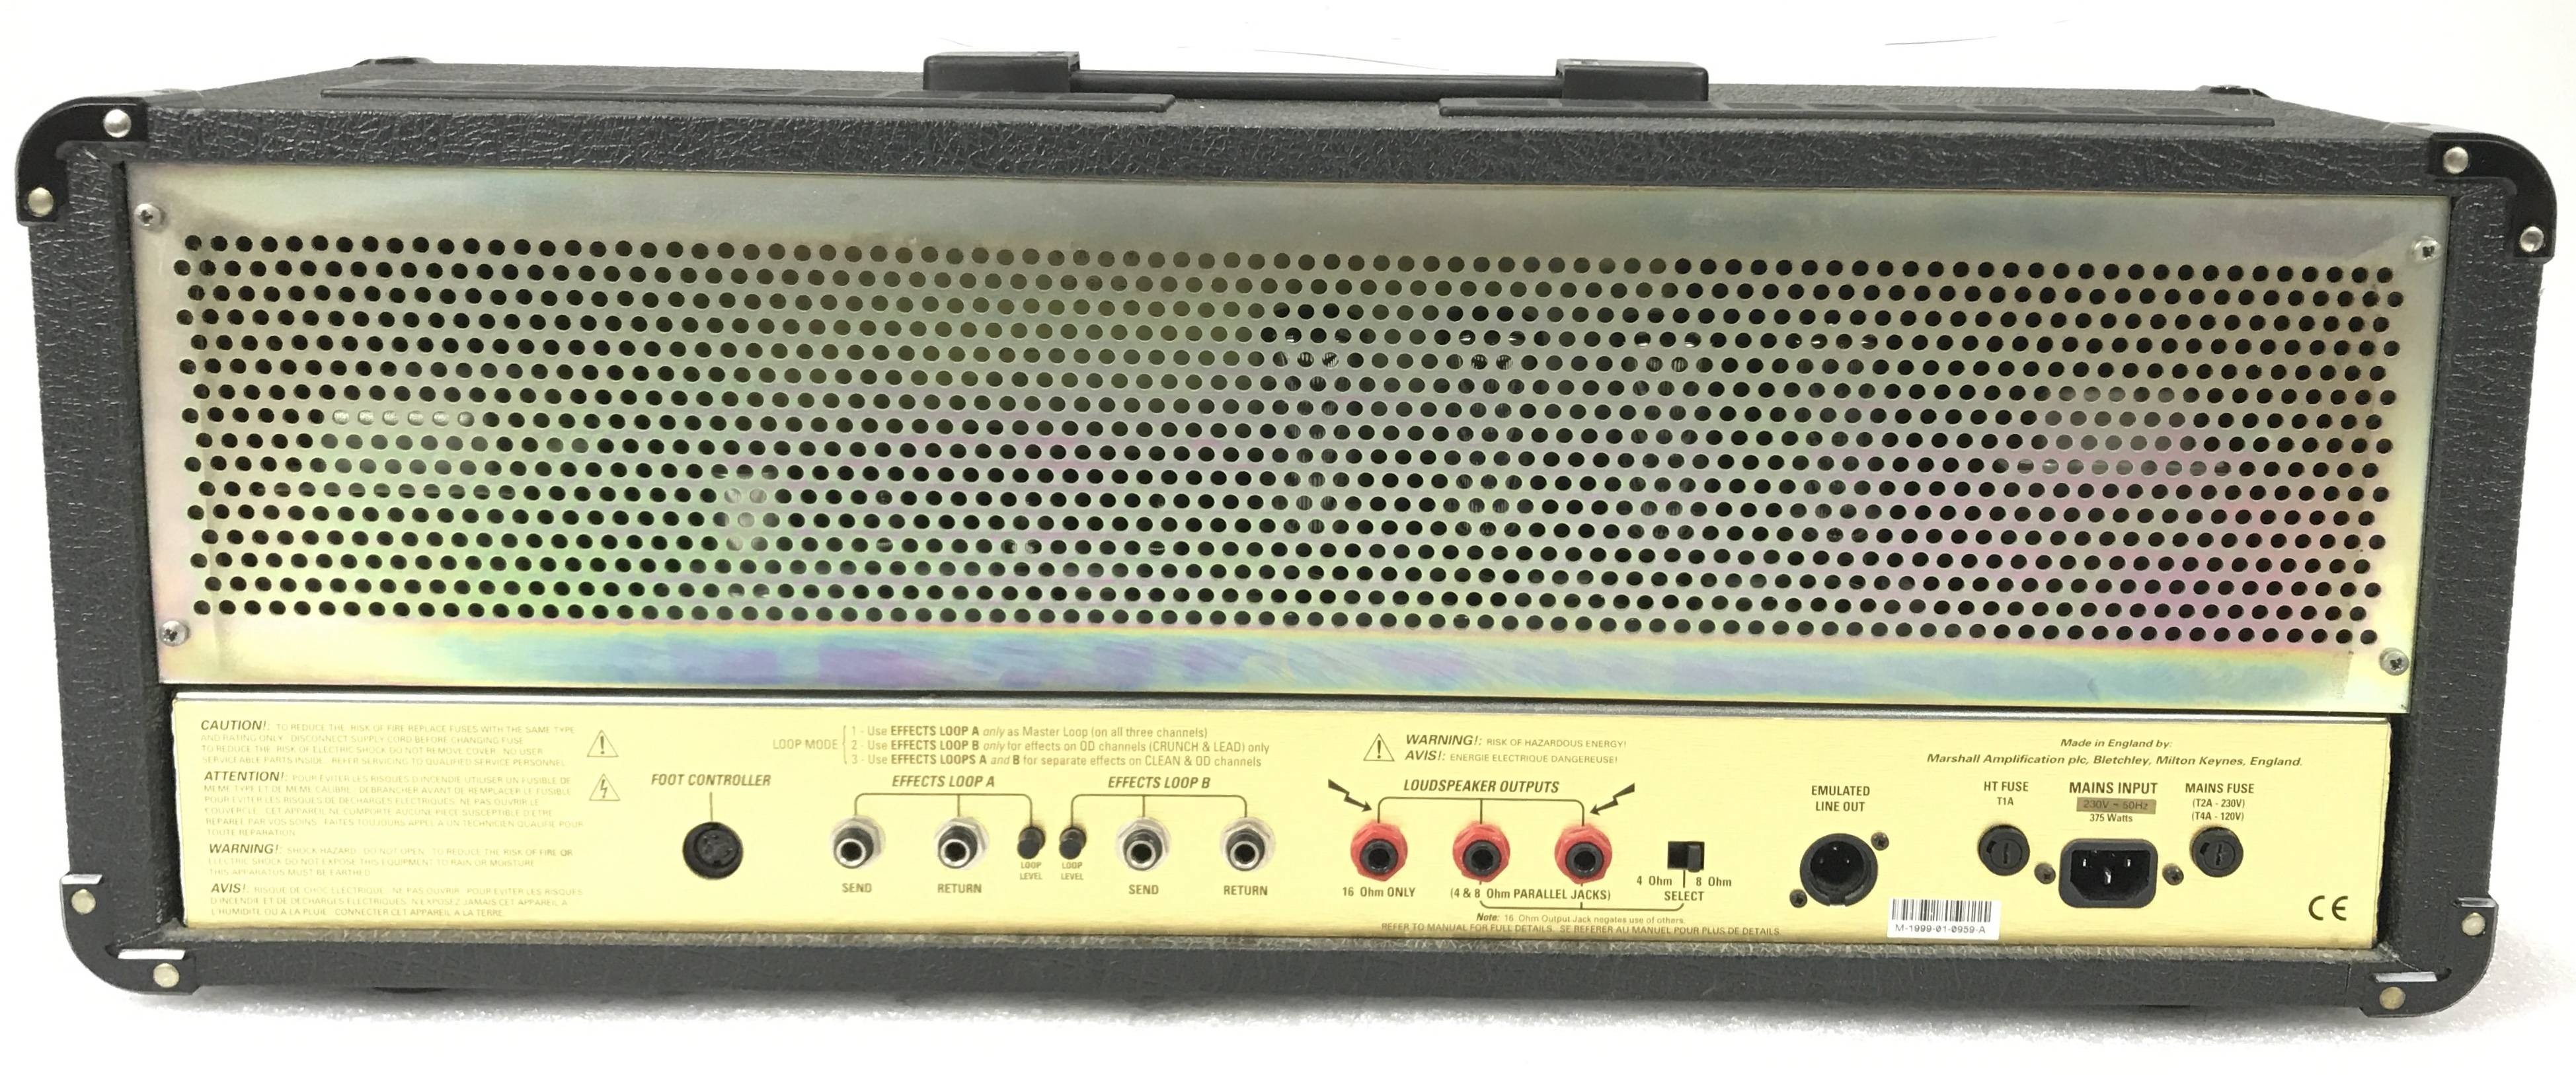 Elettrica Marshall Amplificatore per chitarra JCM2000 DS